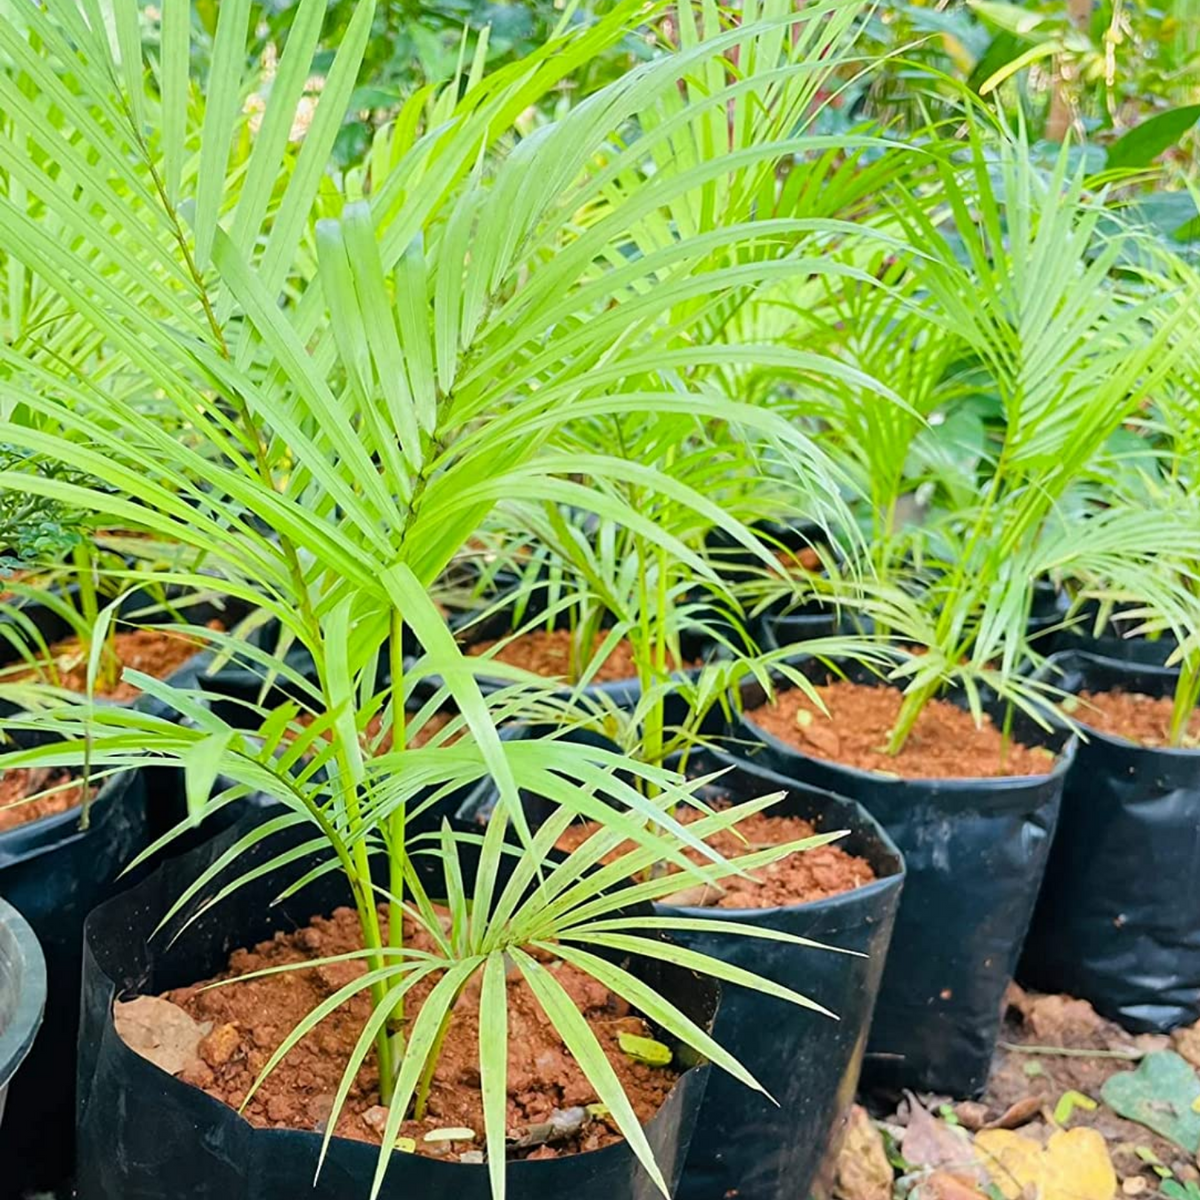 Sayagra Palm Plant (Syagrus romanzoffiana) Ornamental Live Plant (Home & Garden)